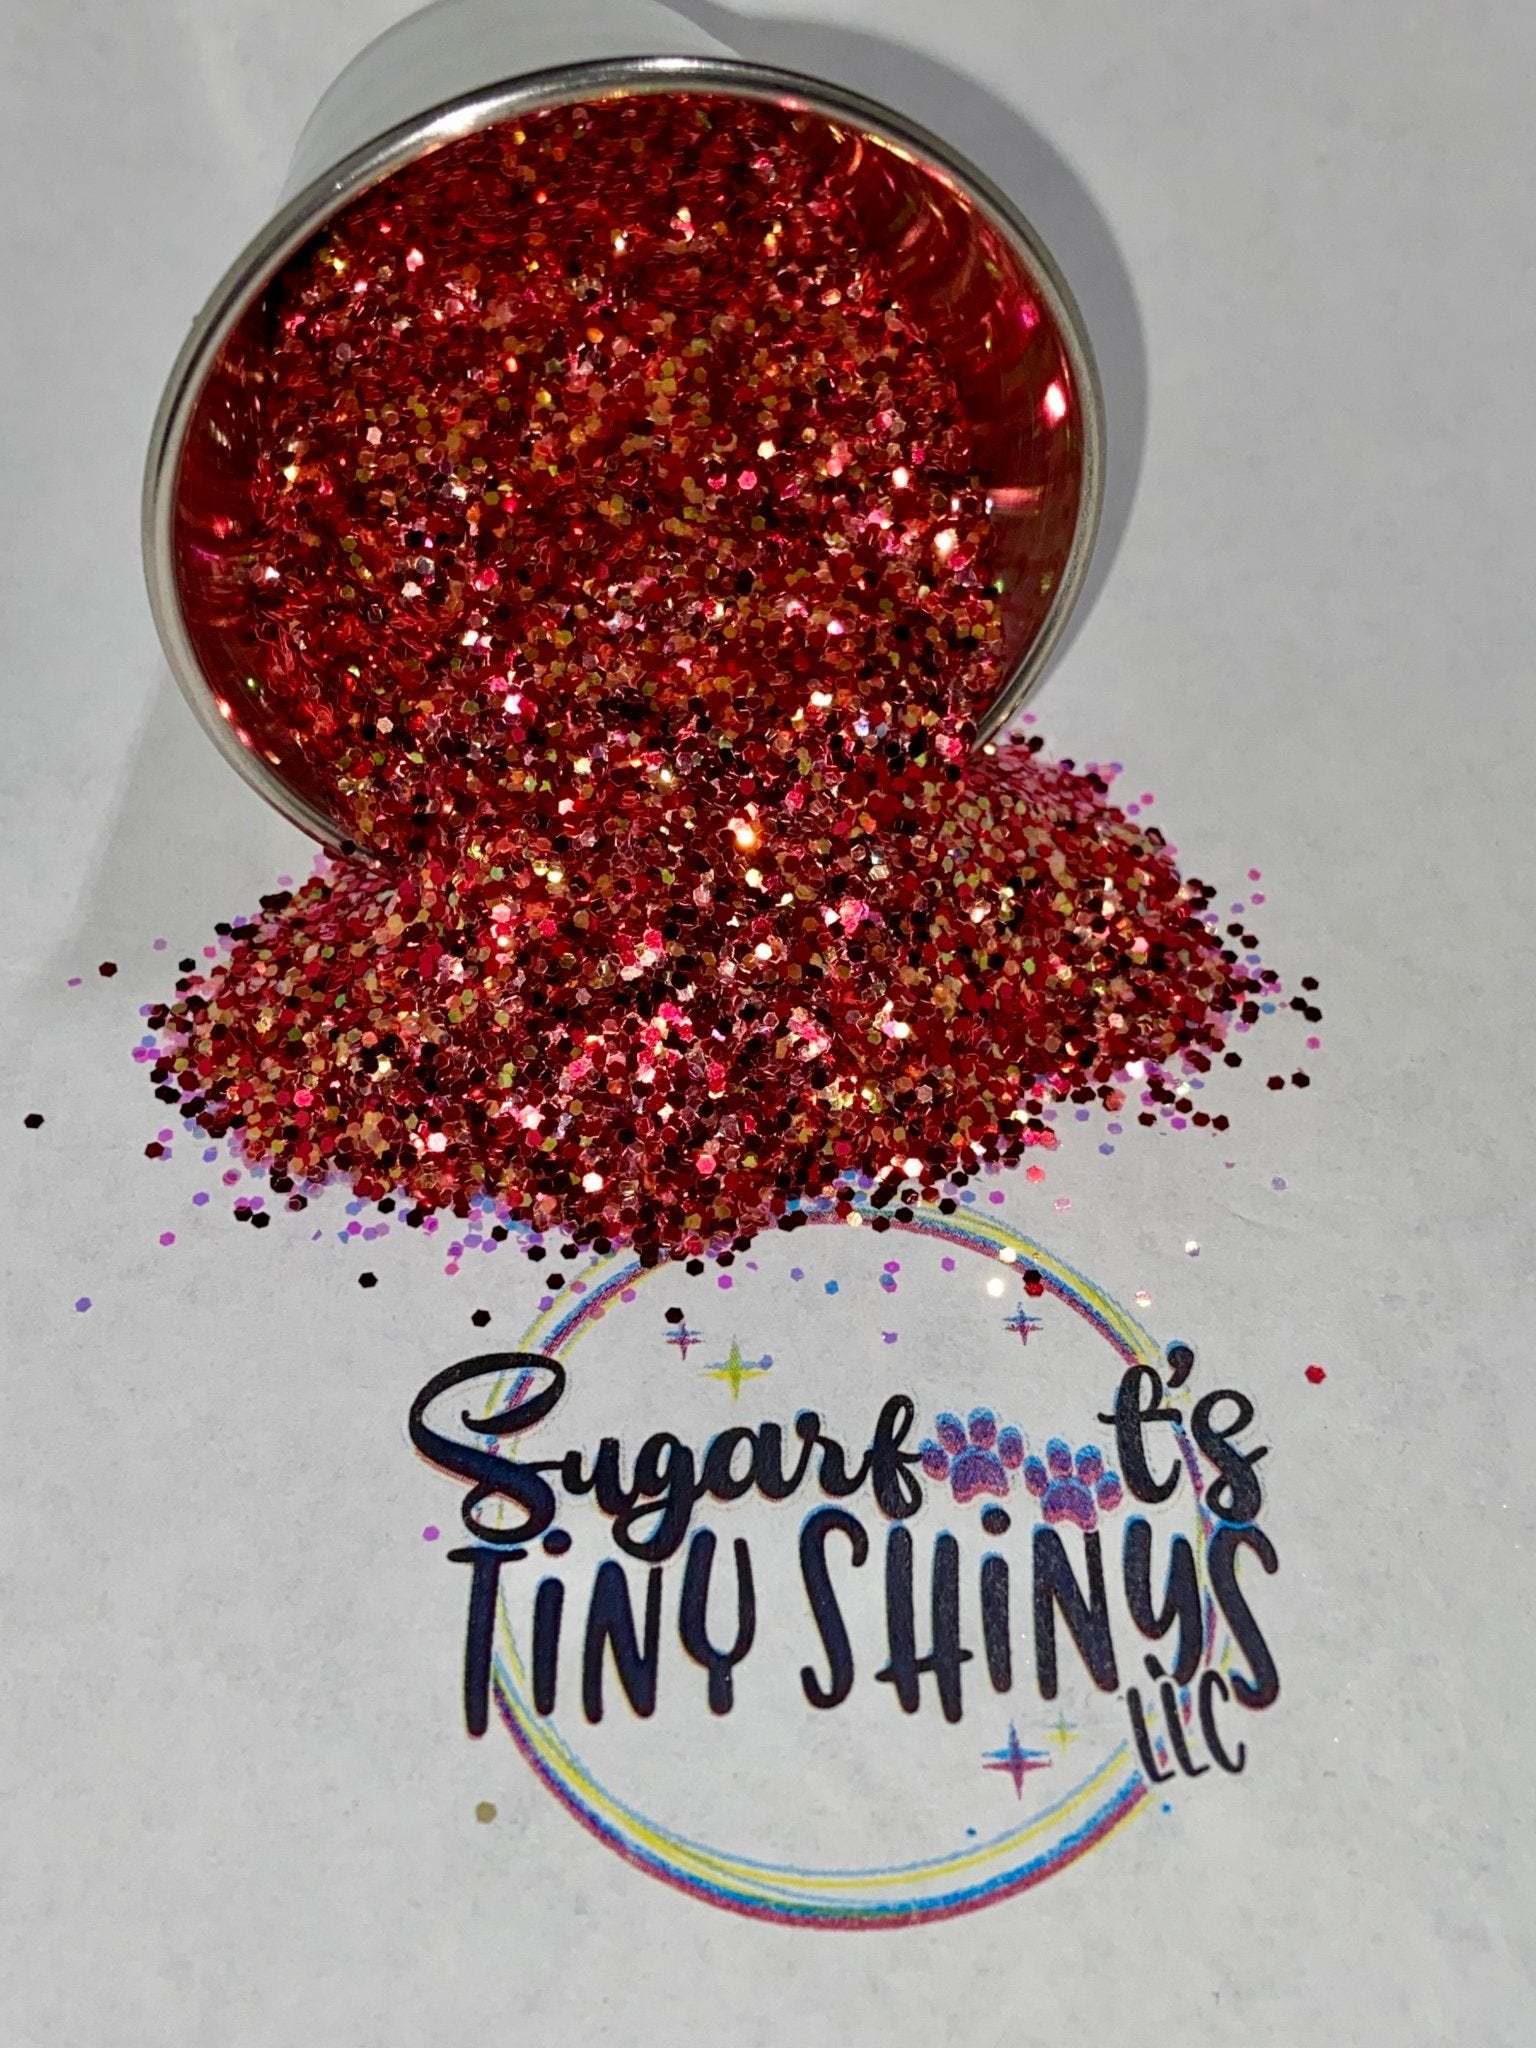 Blaze - Sugarfoot's Tiny Shinys, LLC